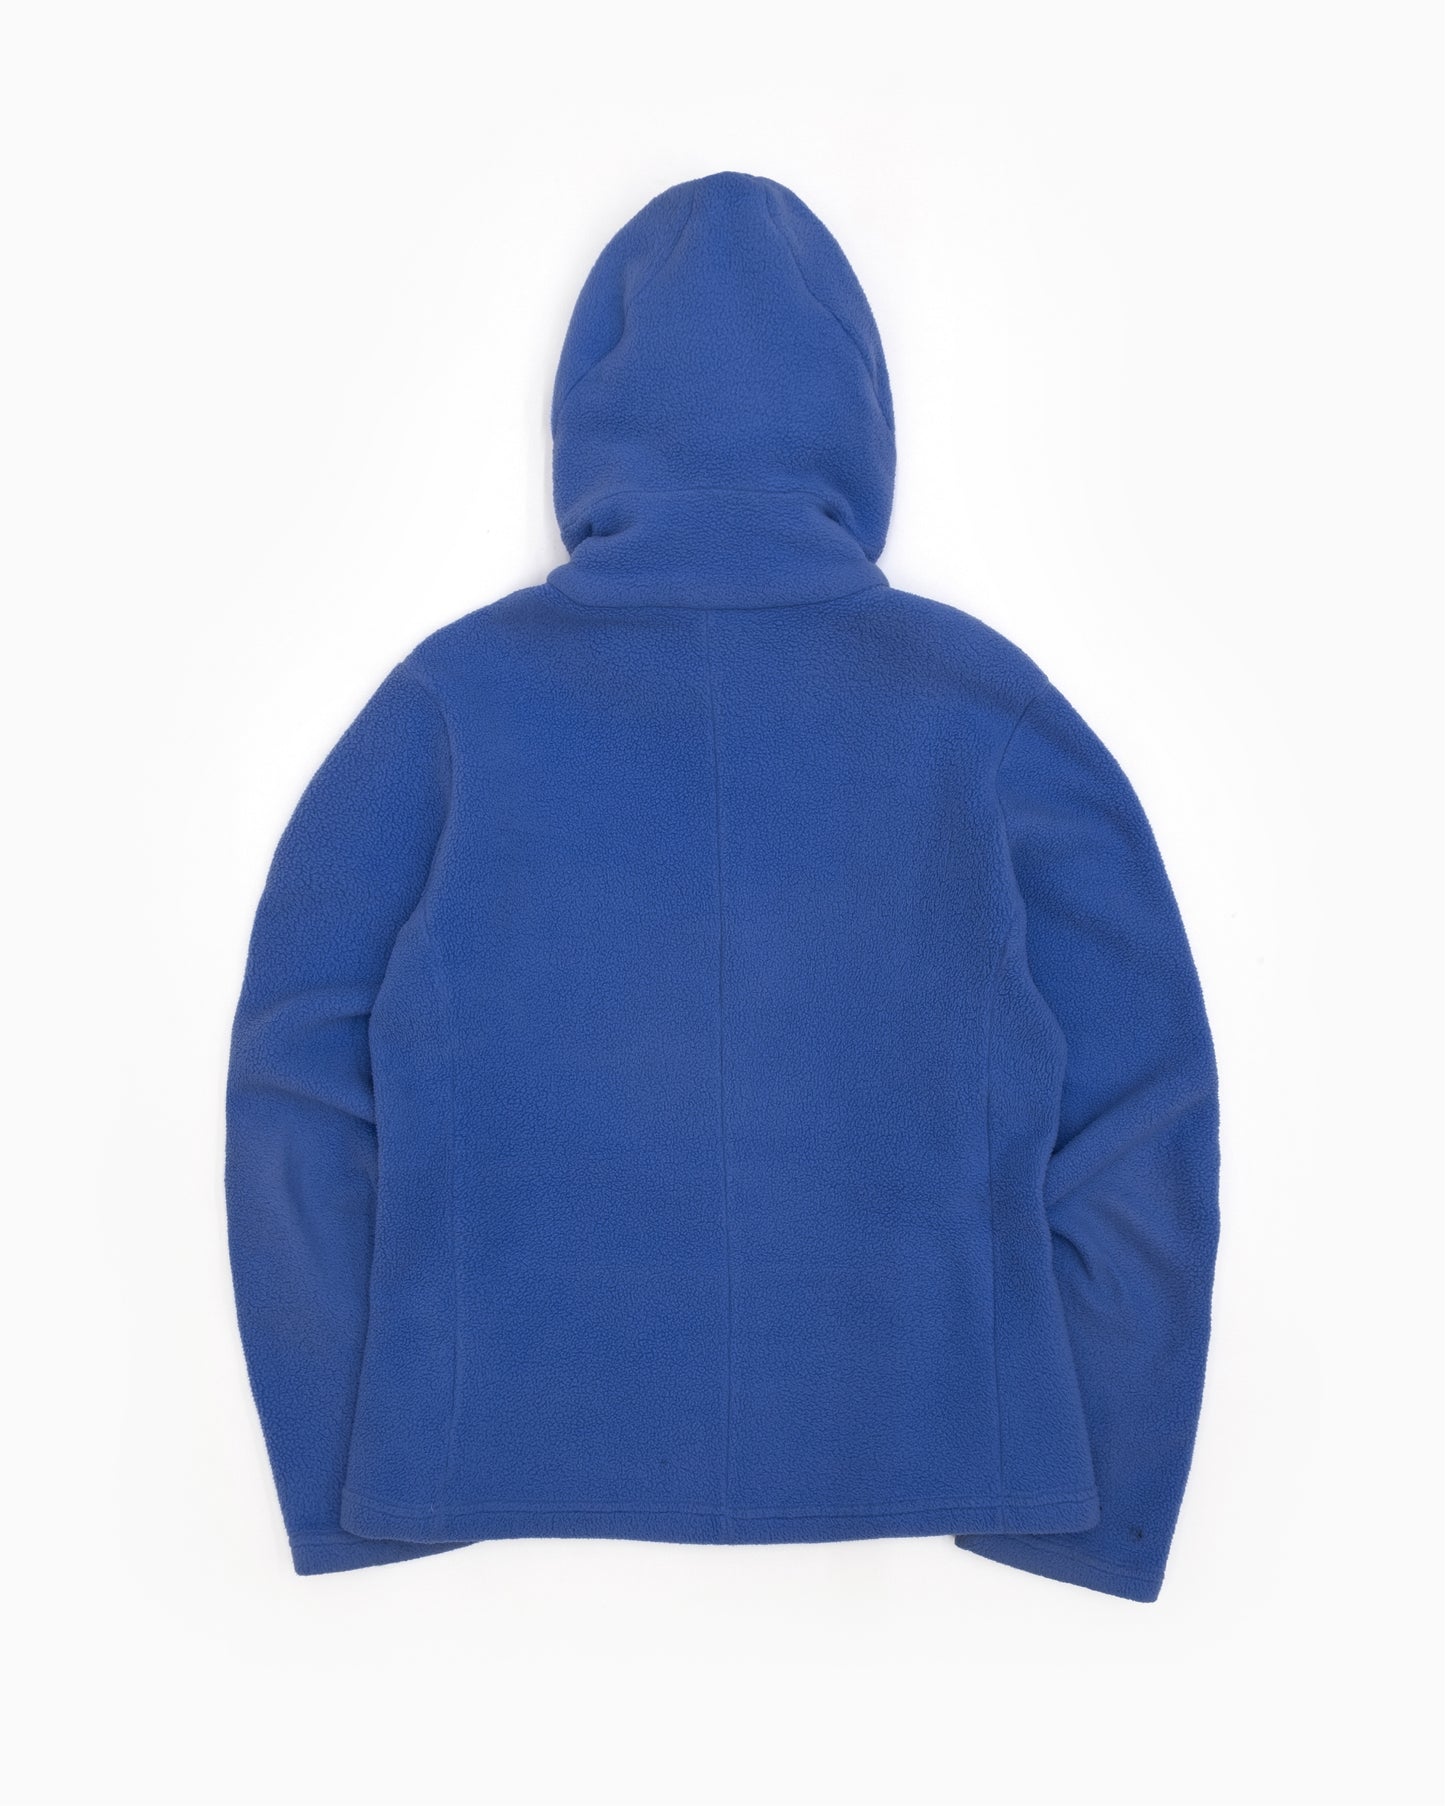 Vexed Generation Ninja Hooded Fleece Jacket - 1996